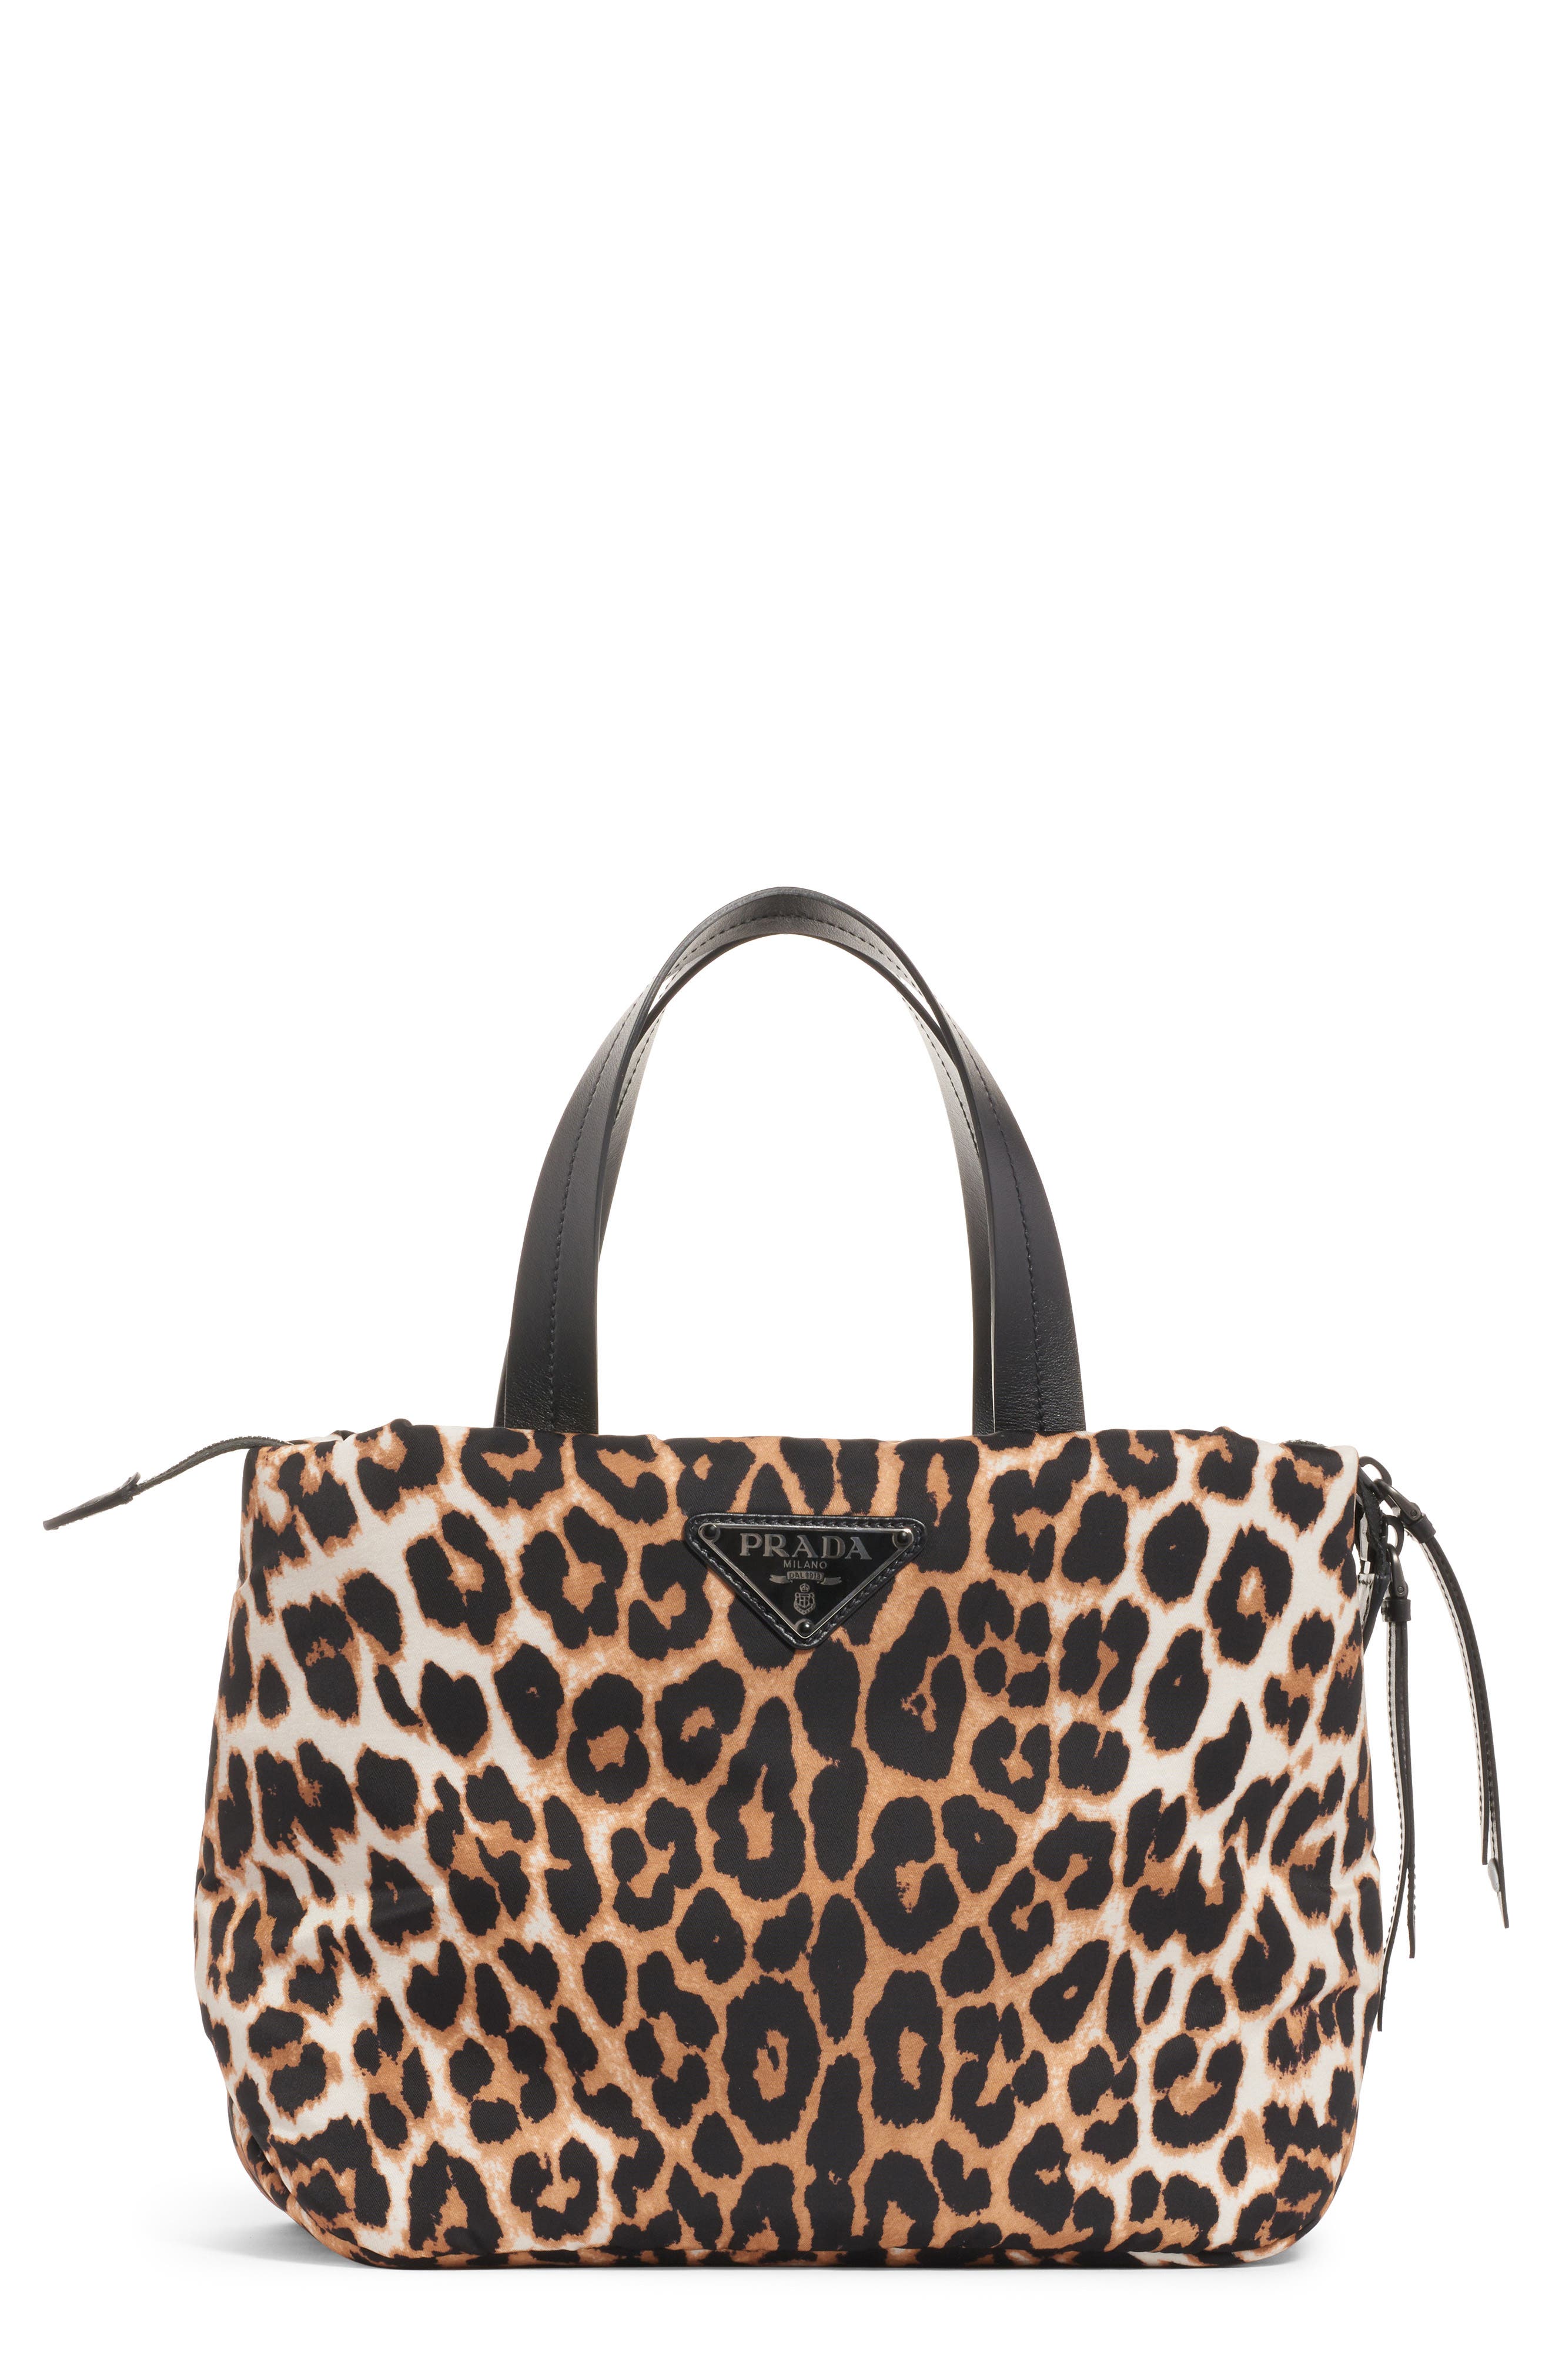 prada leopard handbags